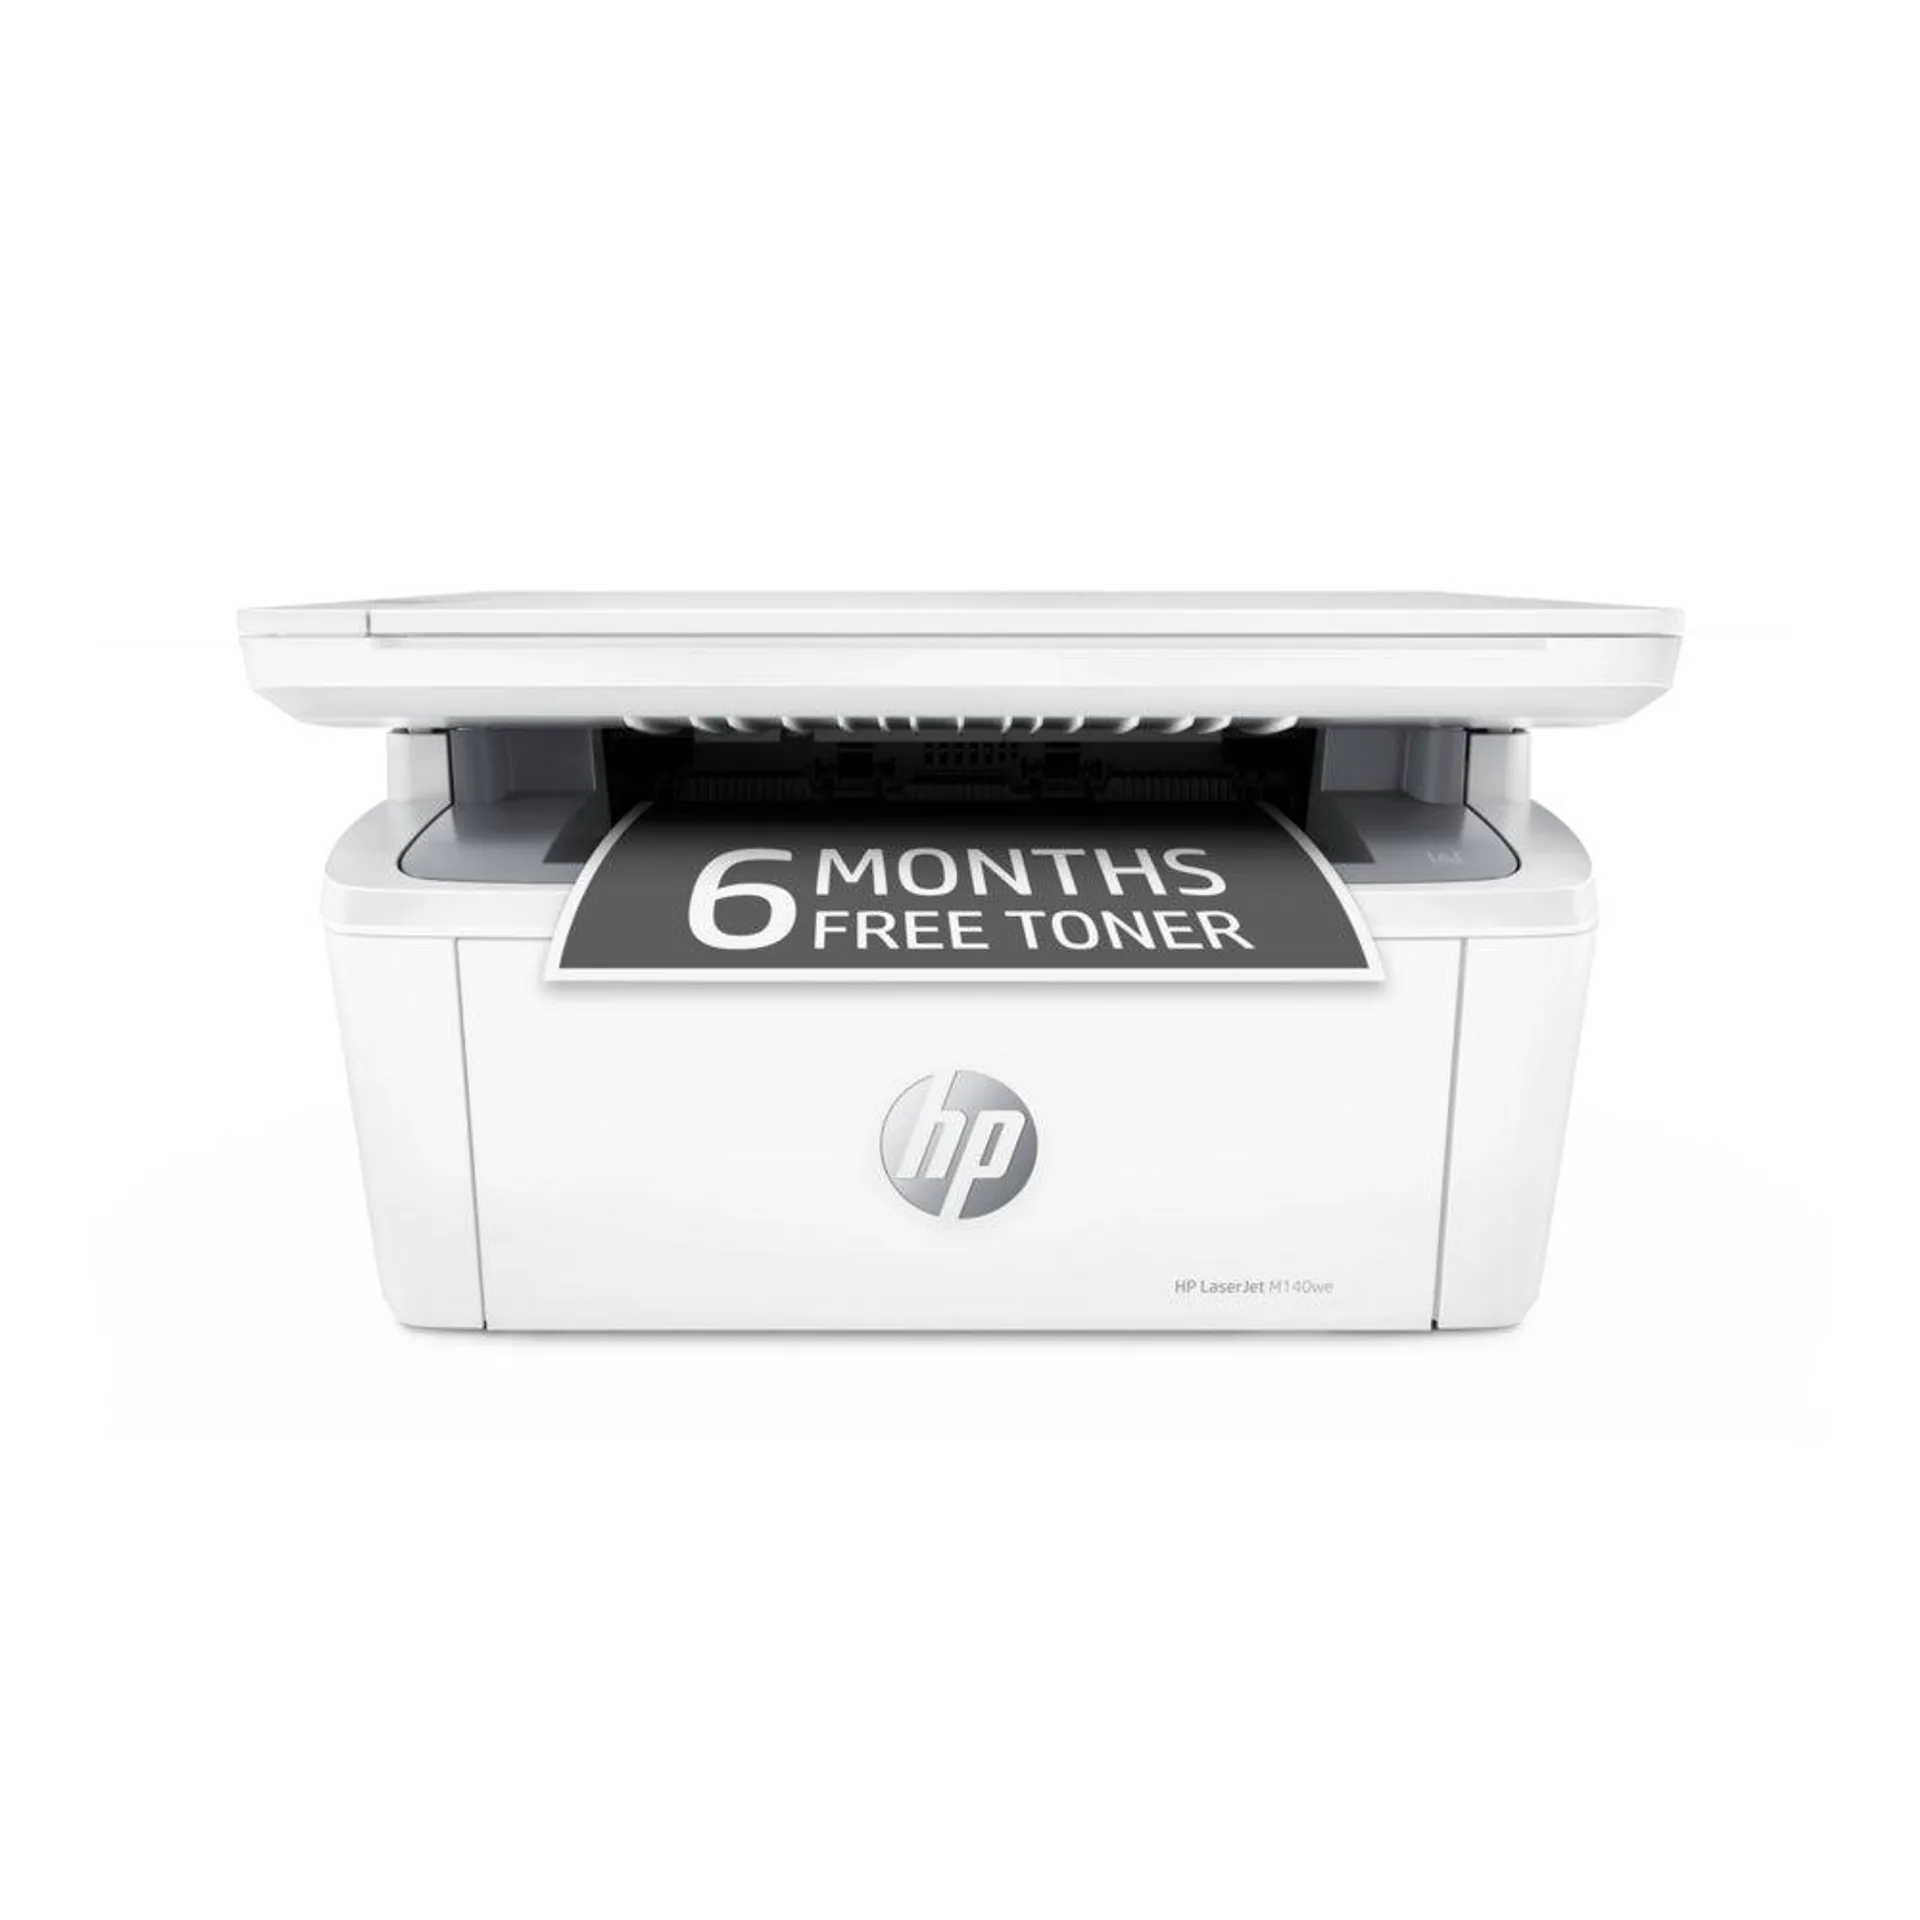 HP LaserJet MFP M140we Wireless Black & White Printer (7MD72E)